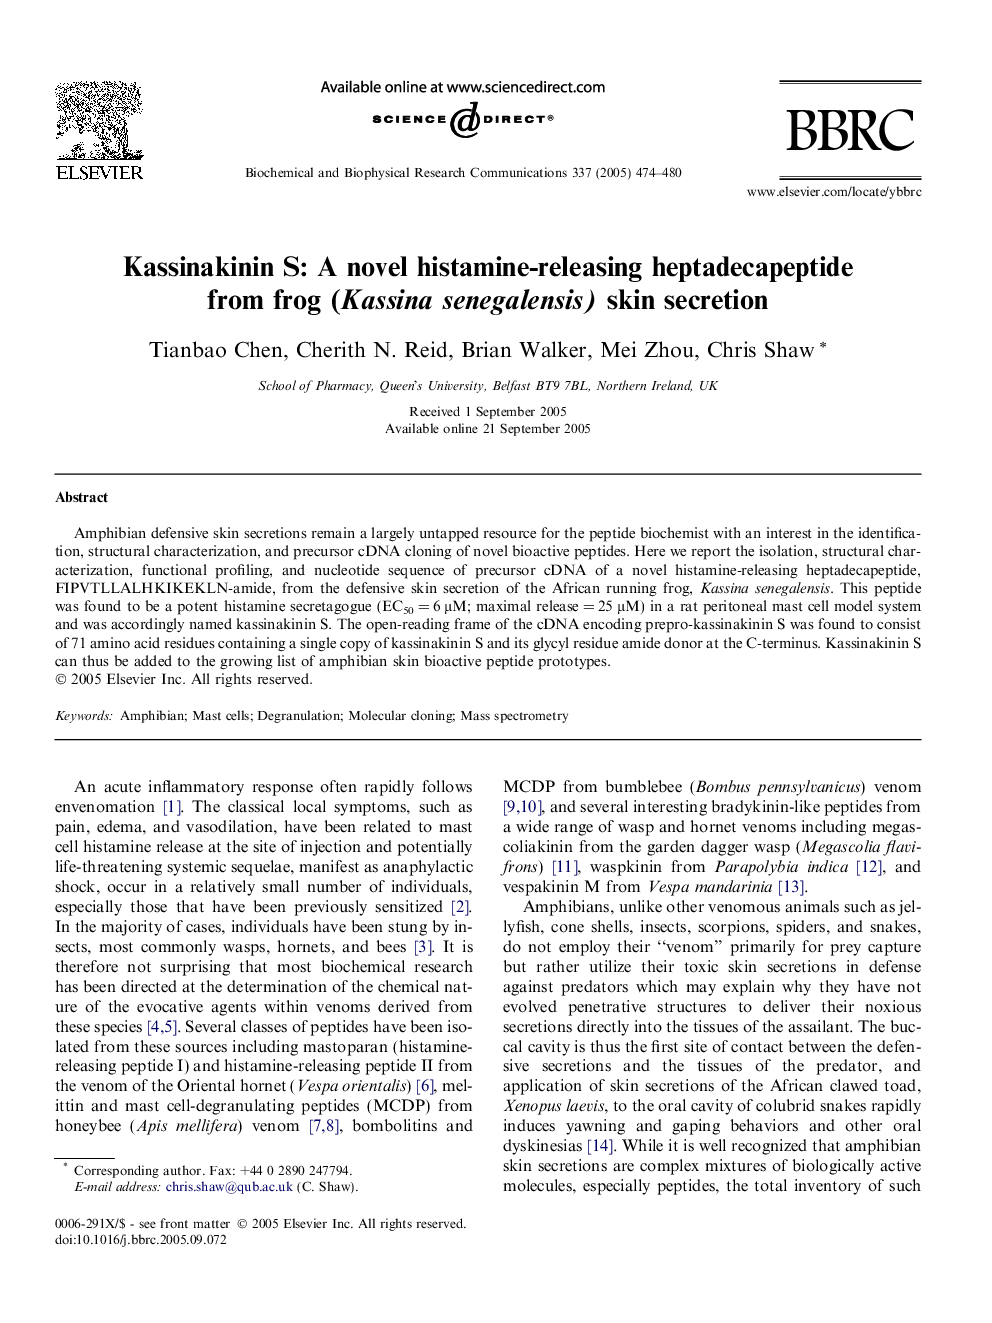 Kassinakinin S: A novel histamine-releasing heptadecapeptide from frog (Kassina senegalensis) skin secretion